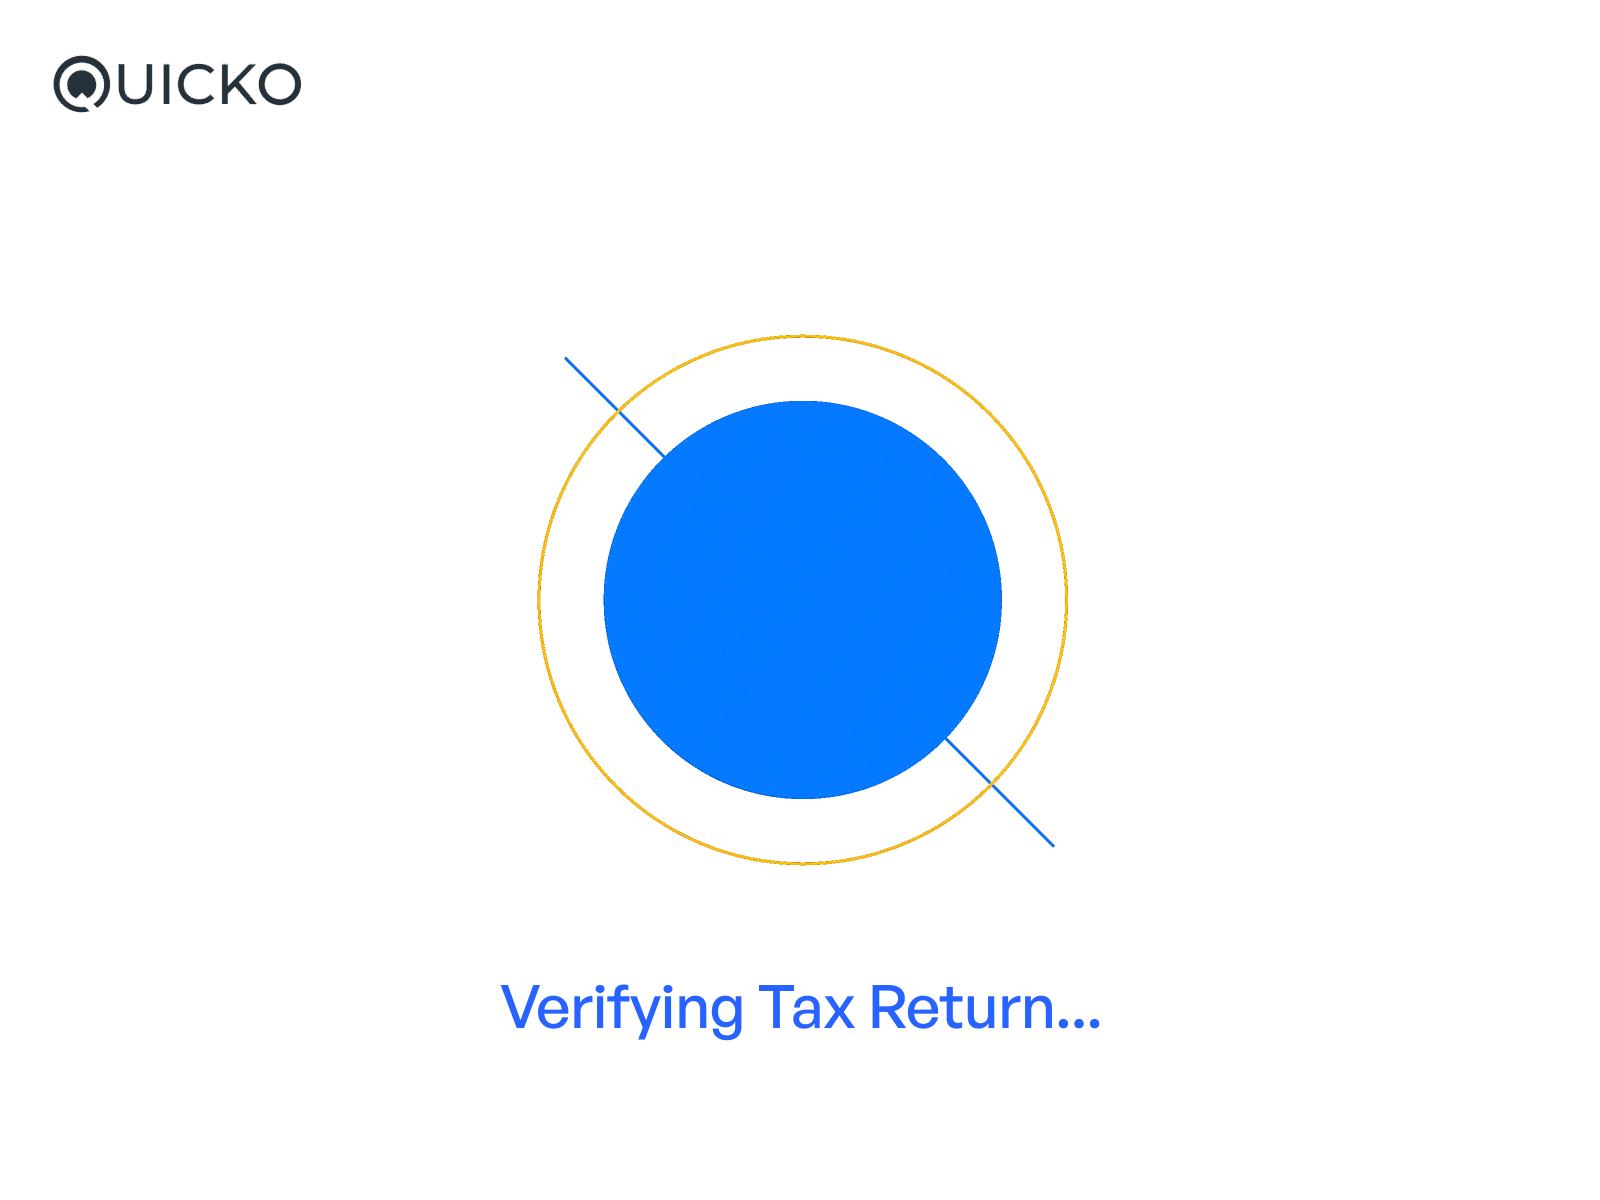 Verifying Details in Tax Return